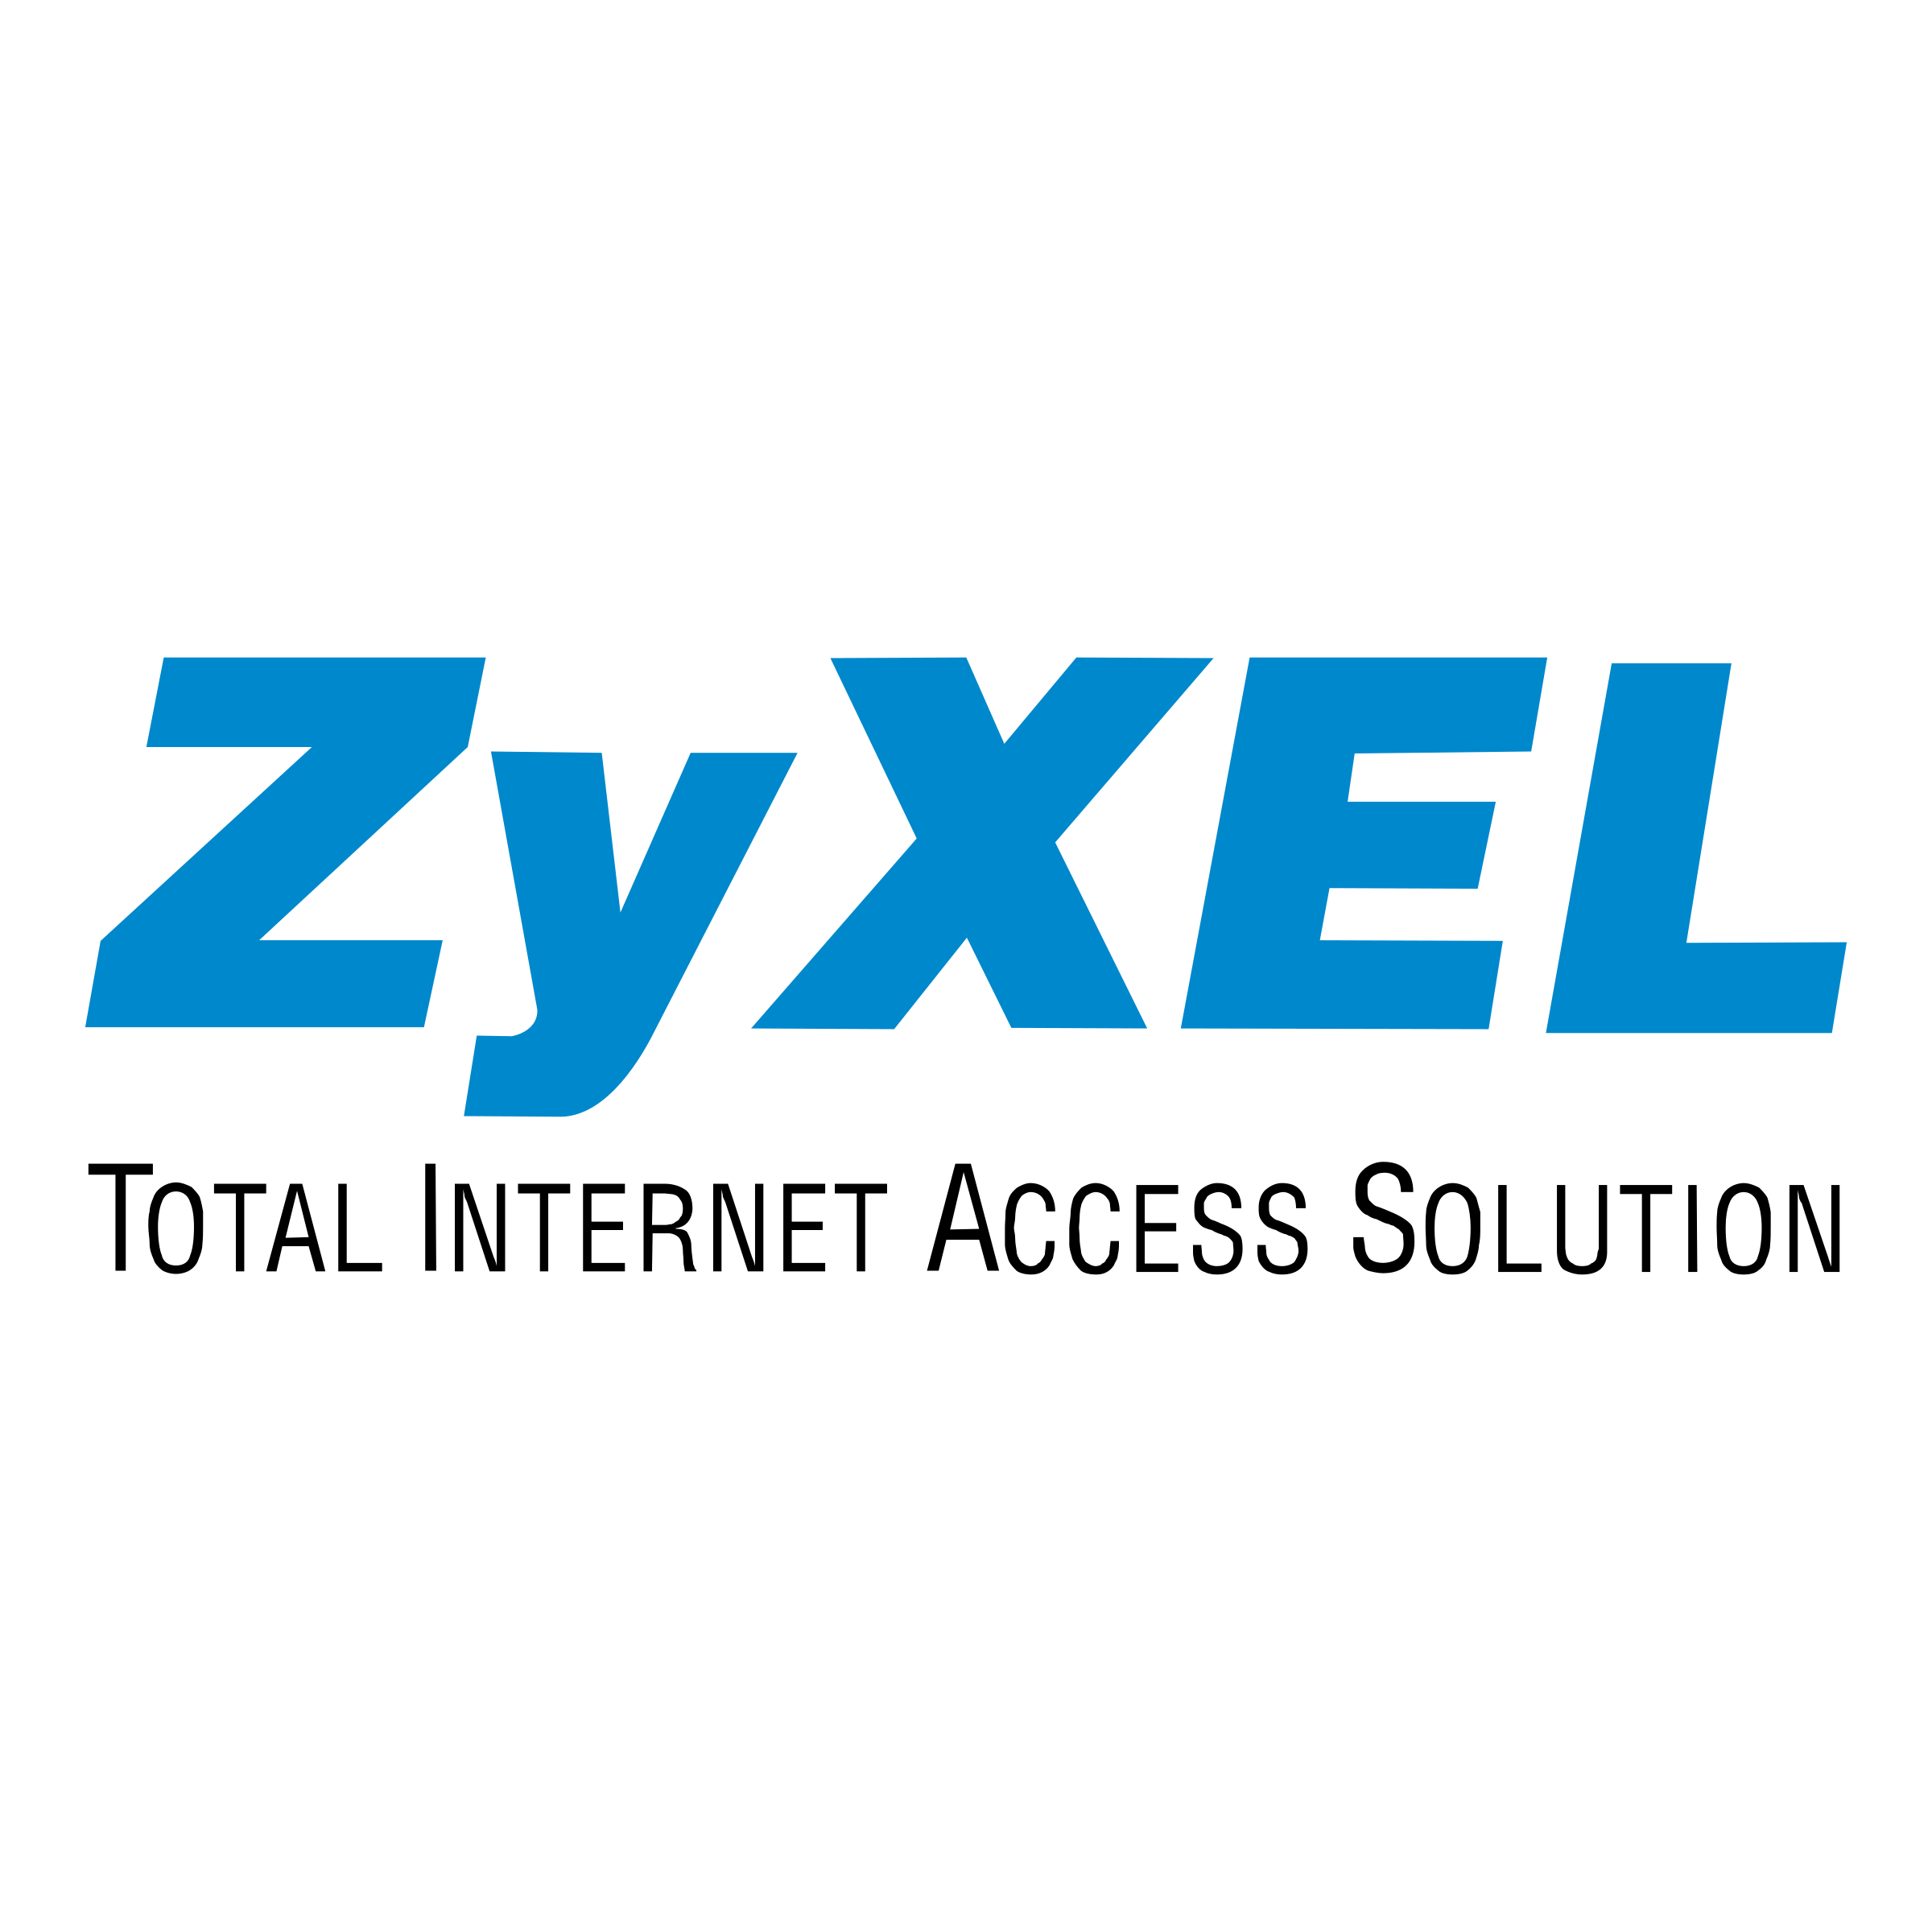 ZyXEL Logo - ZyXEL Logo PNG Transparent & SVG Vector